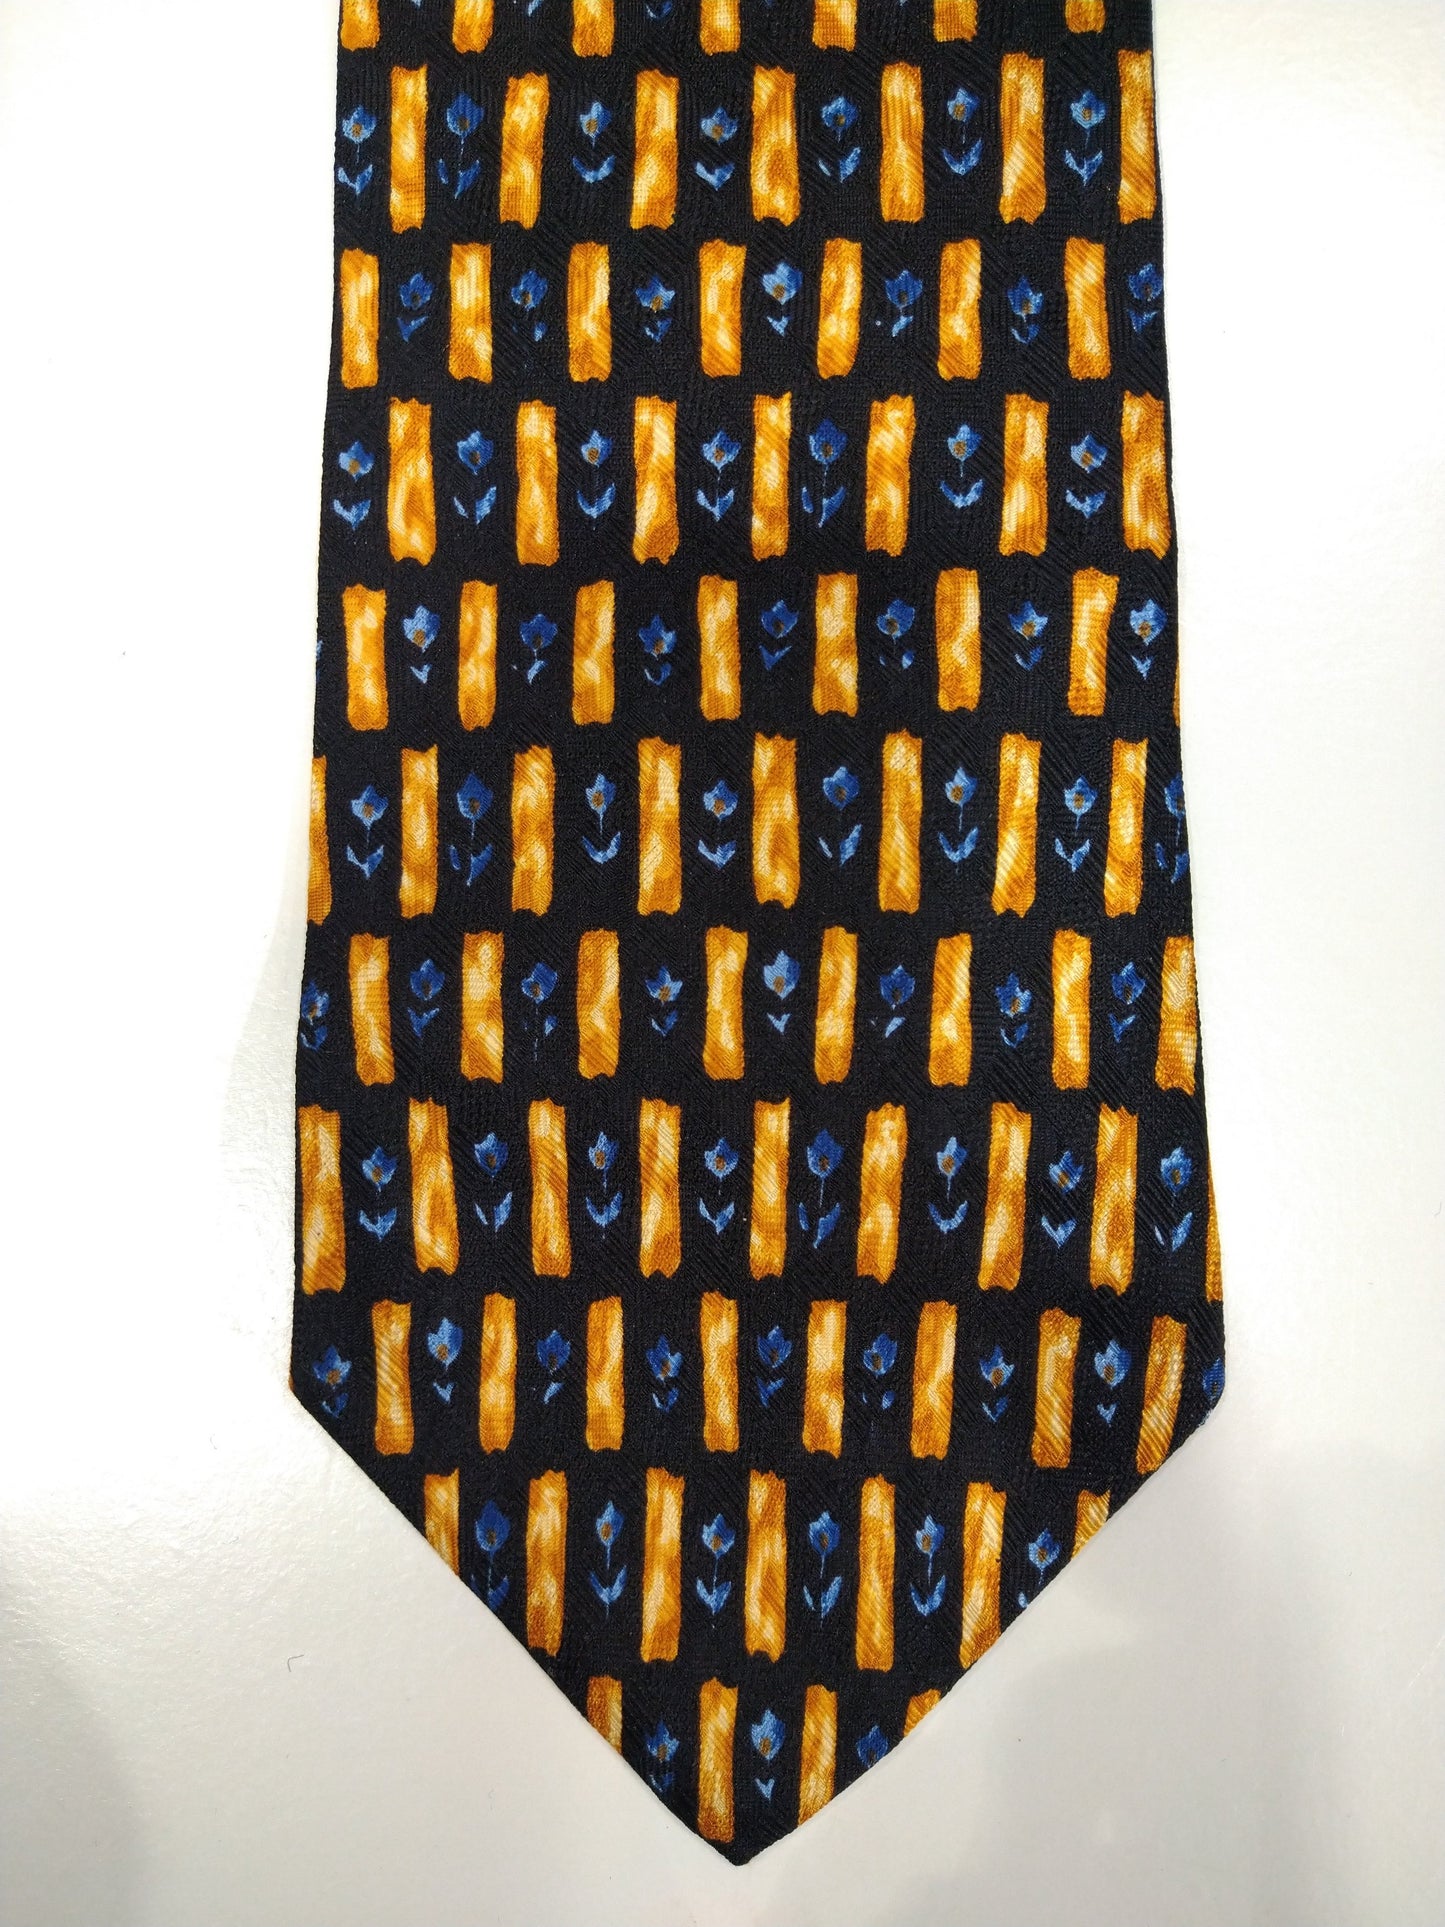 Vintage Hugo Boss silk tie. Blue / black / yellow motif.